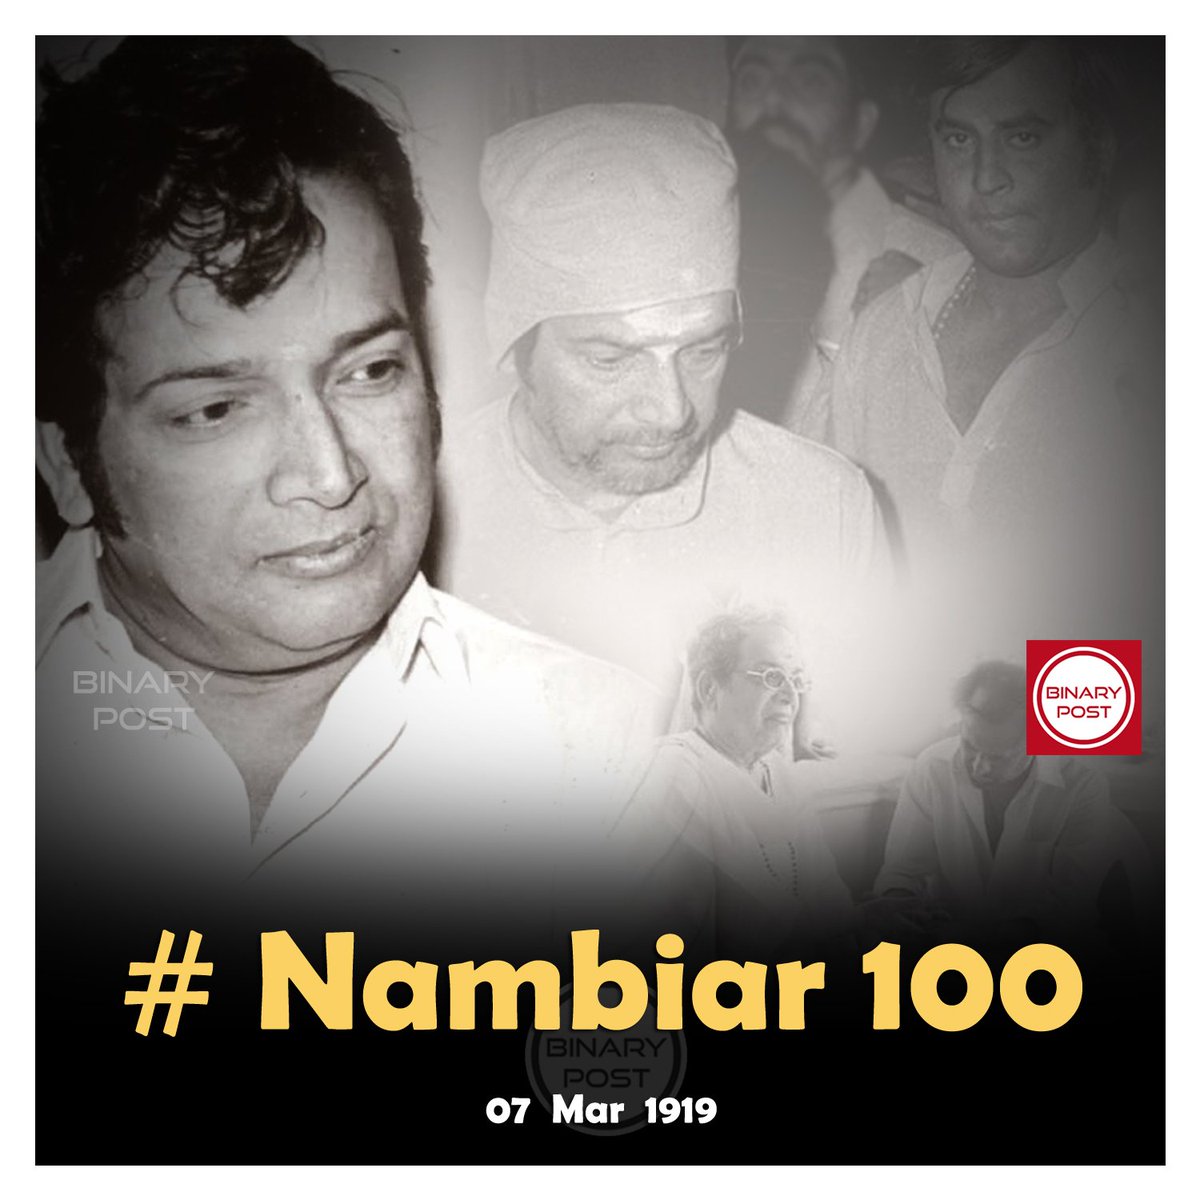 #Nambiar100 #MNNambiar100 #MNNambiar #Nambiar #HBDNambiar  #HappyBirthdayNambiar #Thalaivar #Superstar #Rajinikanth @rajinikanth